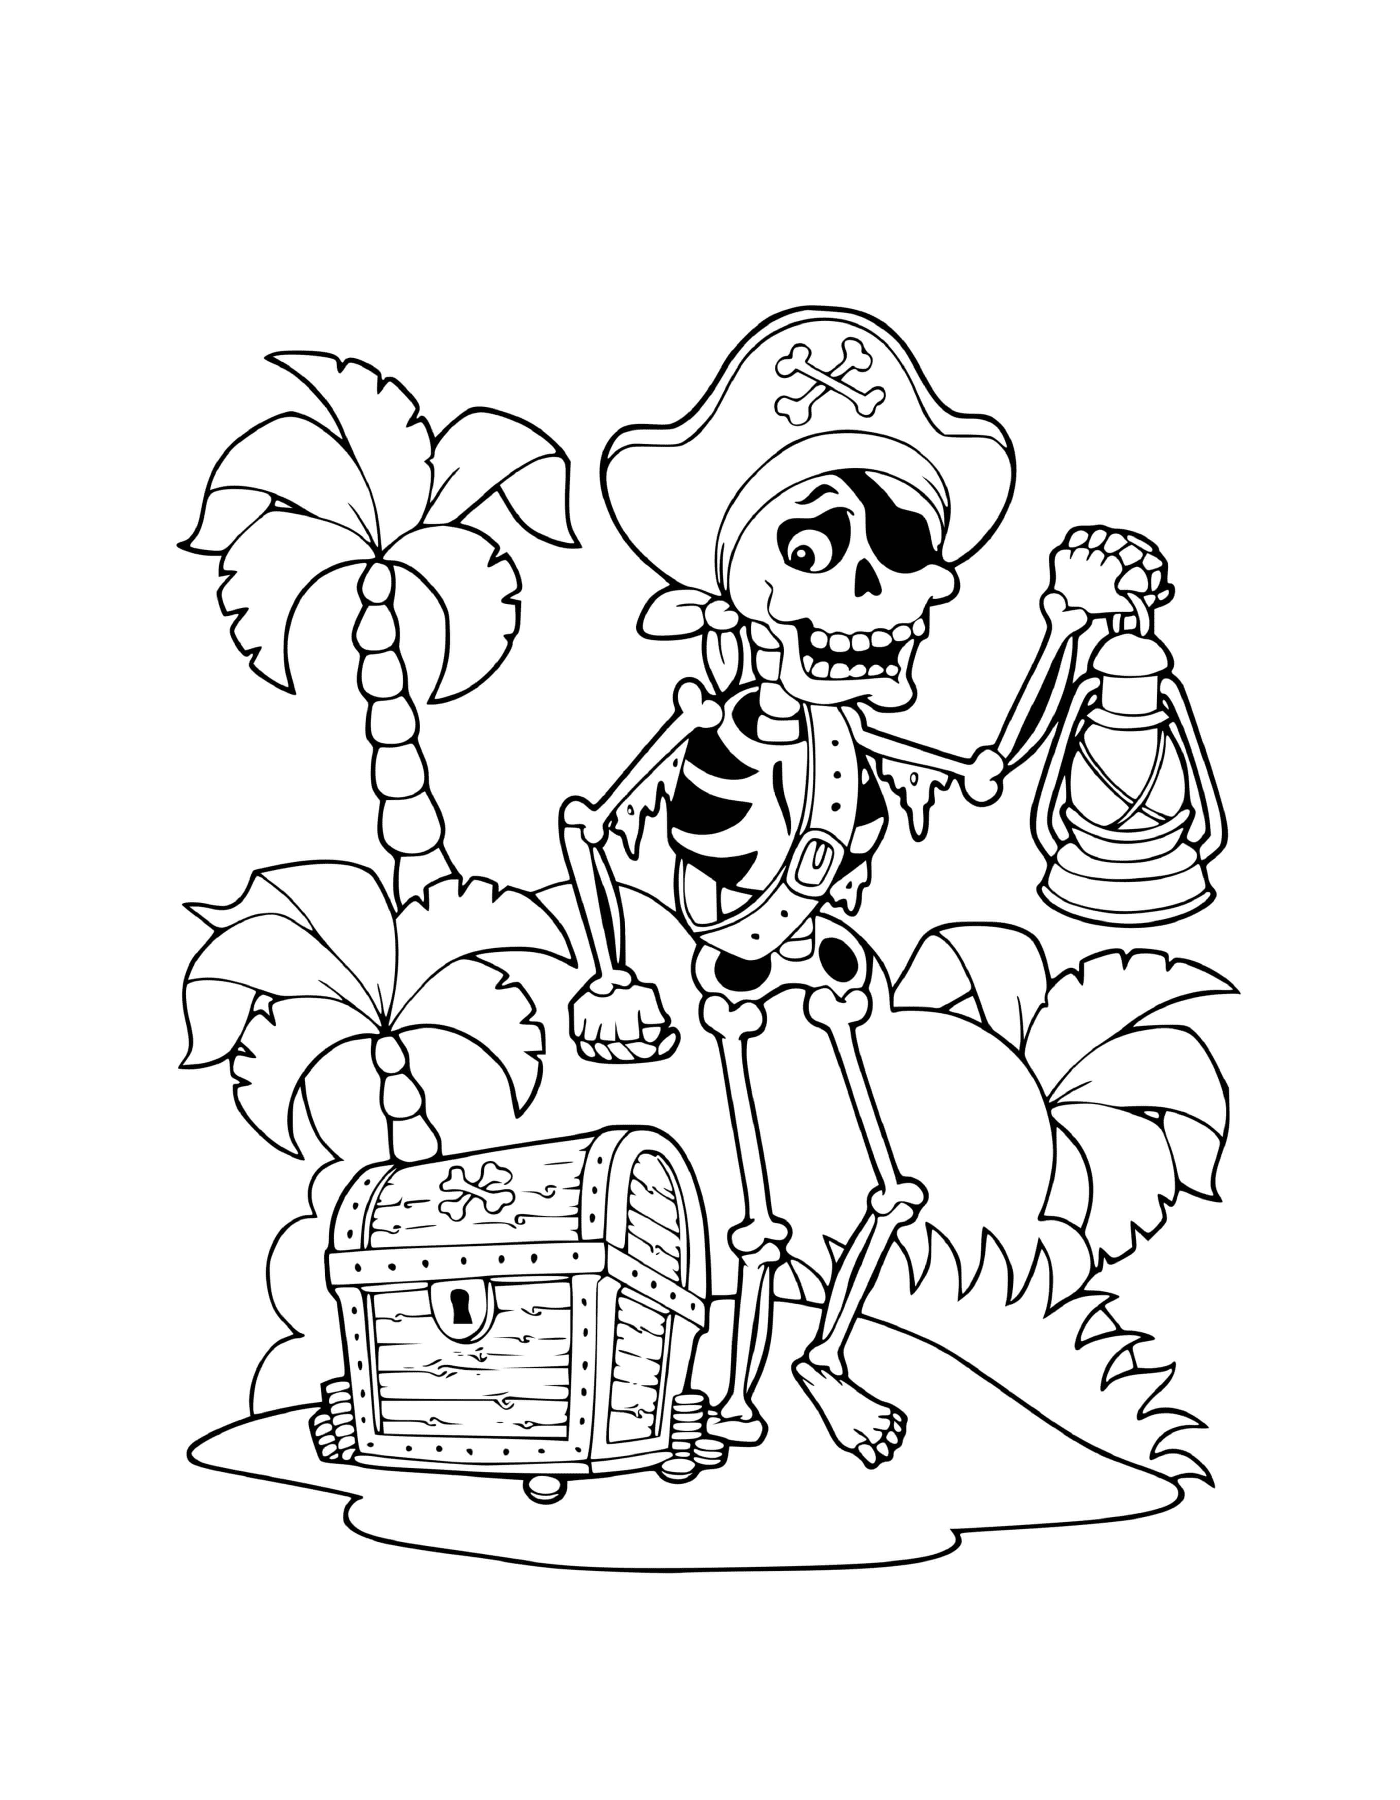  Pirate, skeleton, island, treasure, palm 